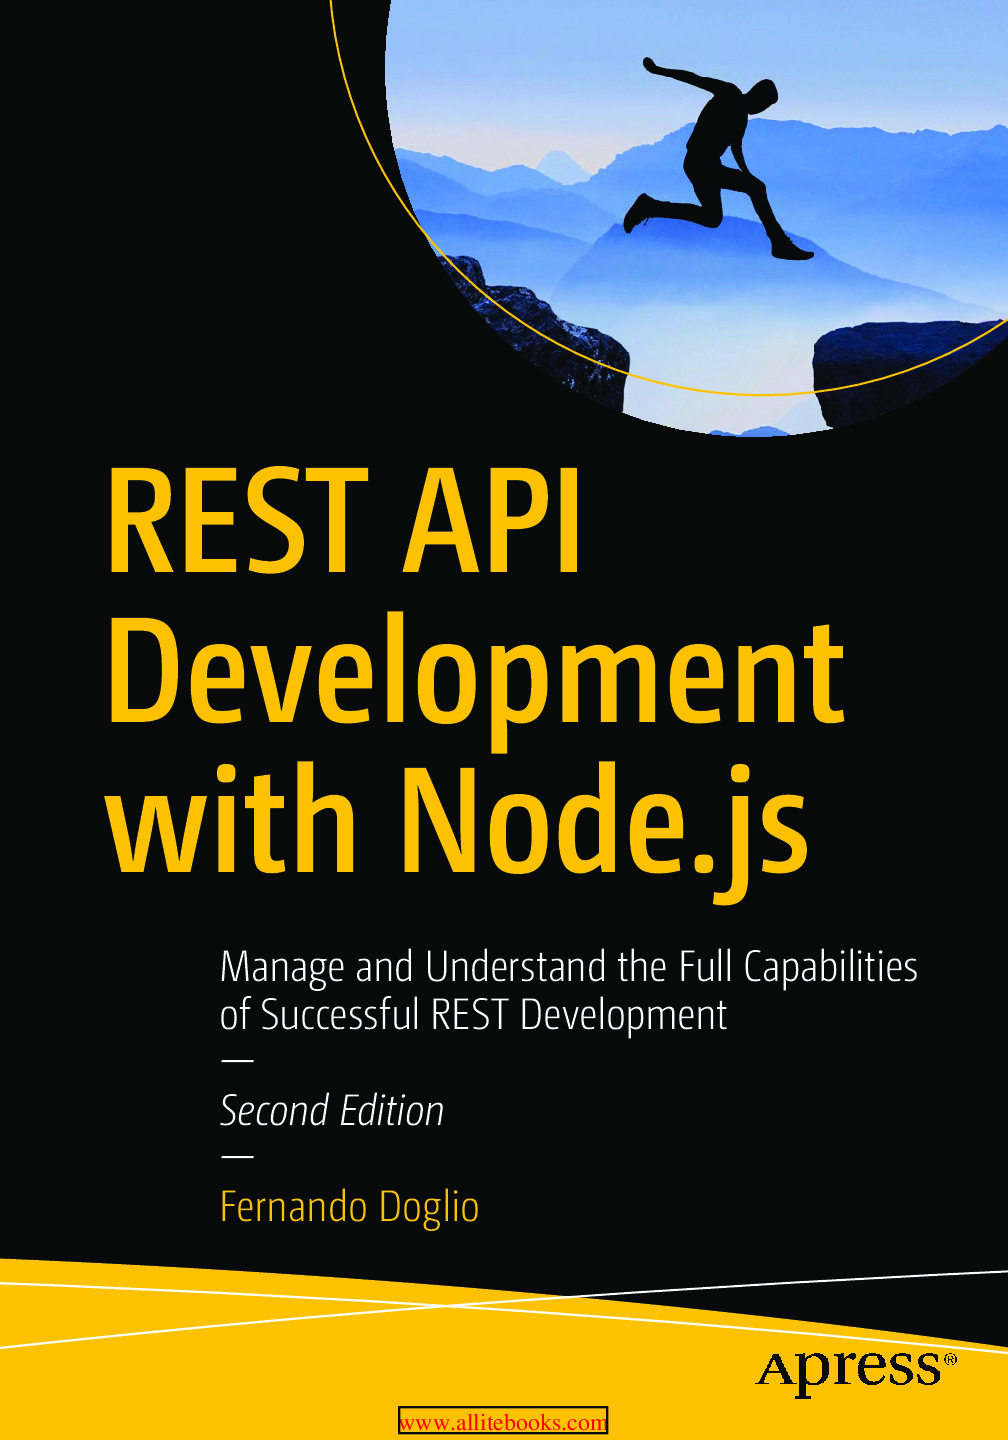 REST API with NodeJS